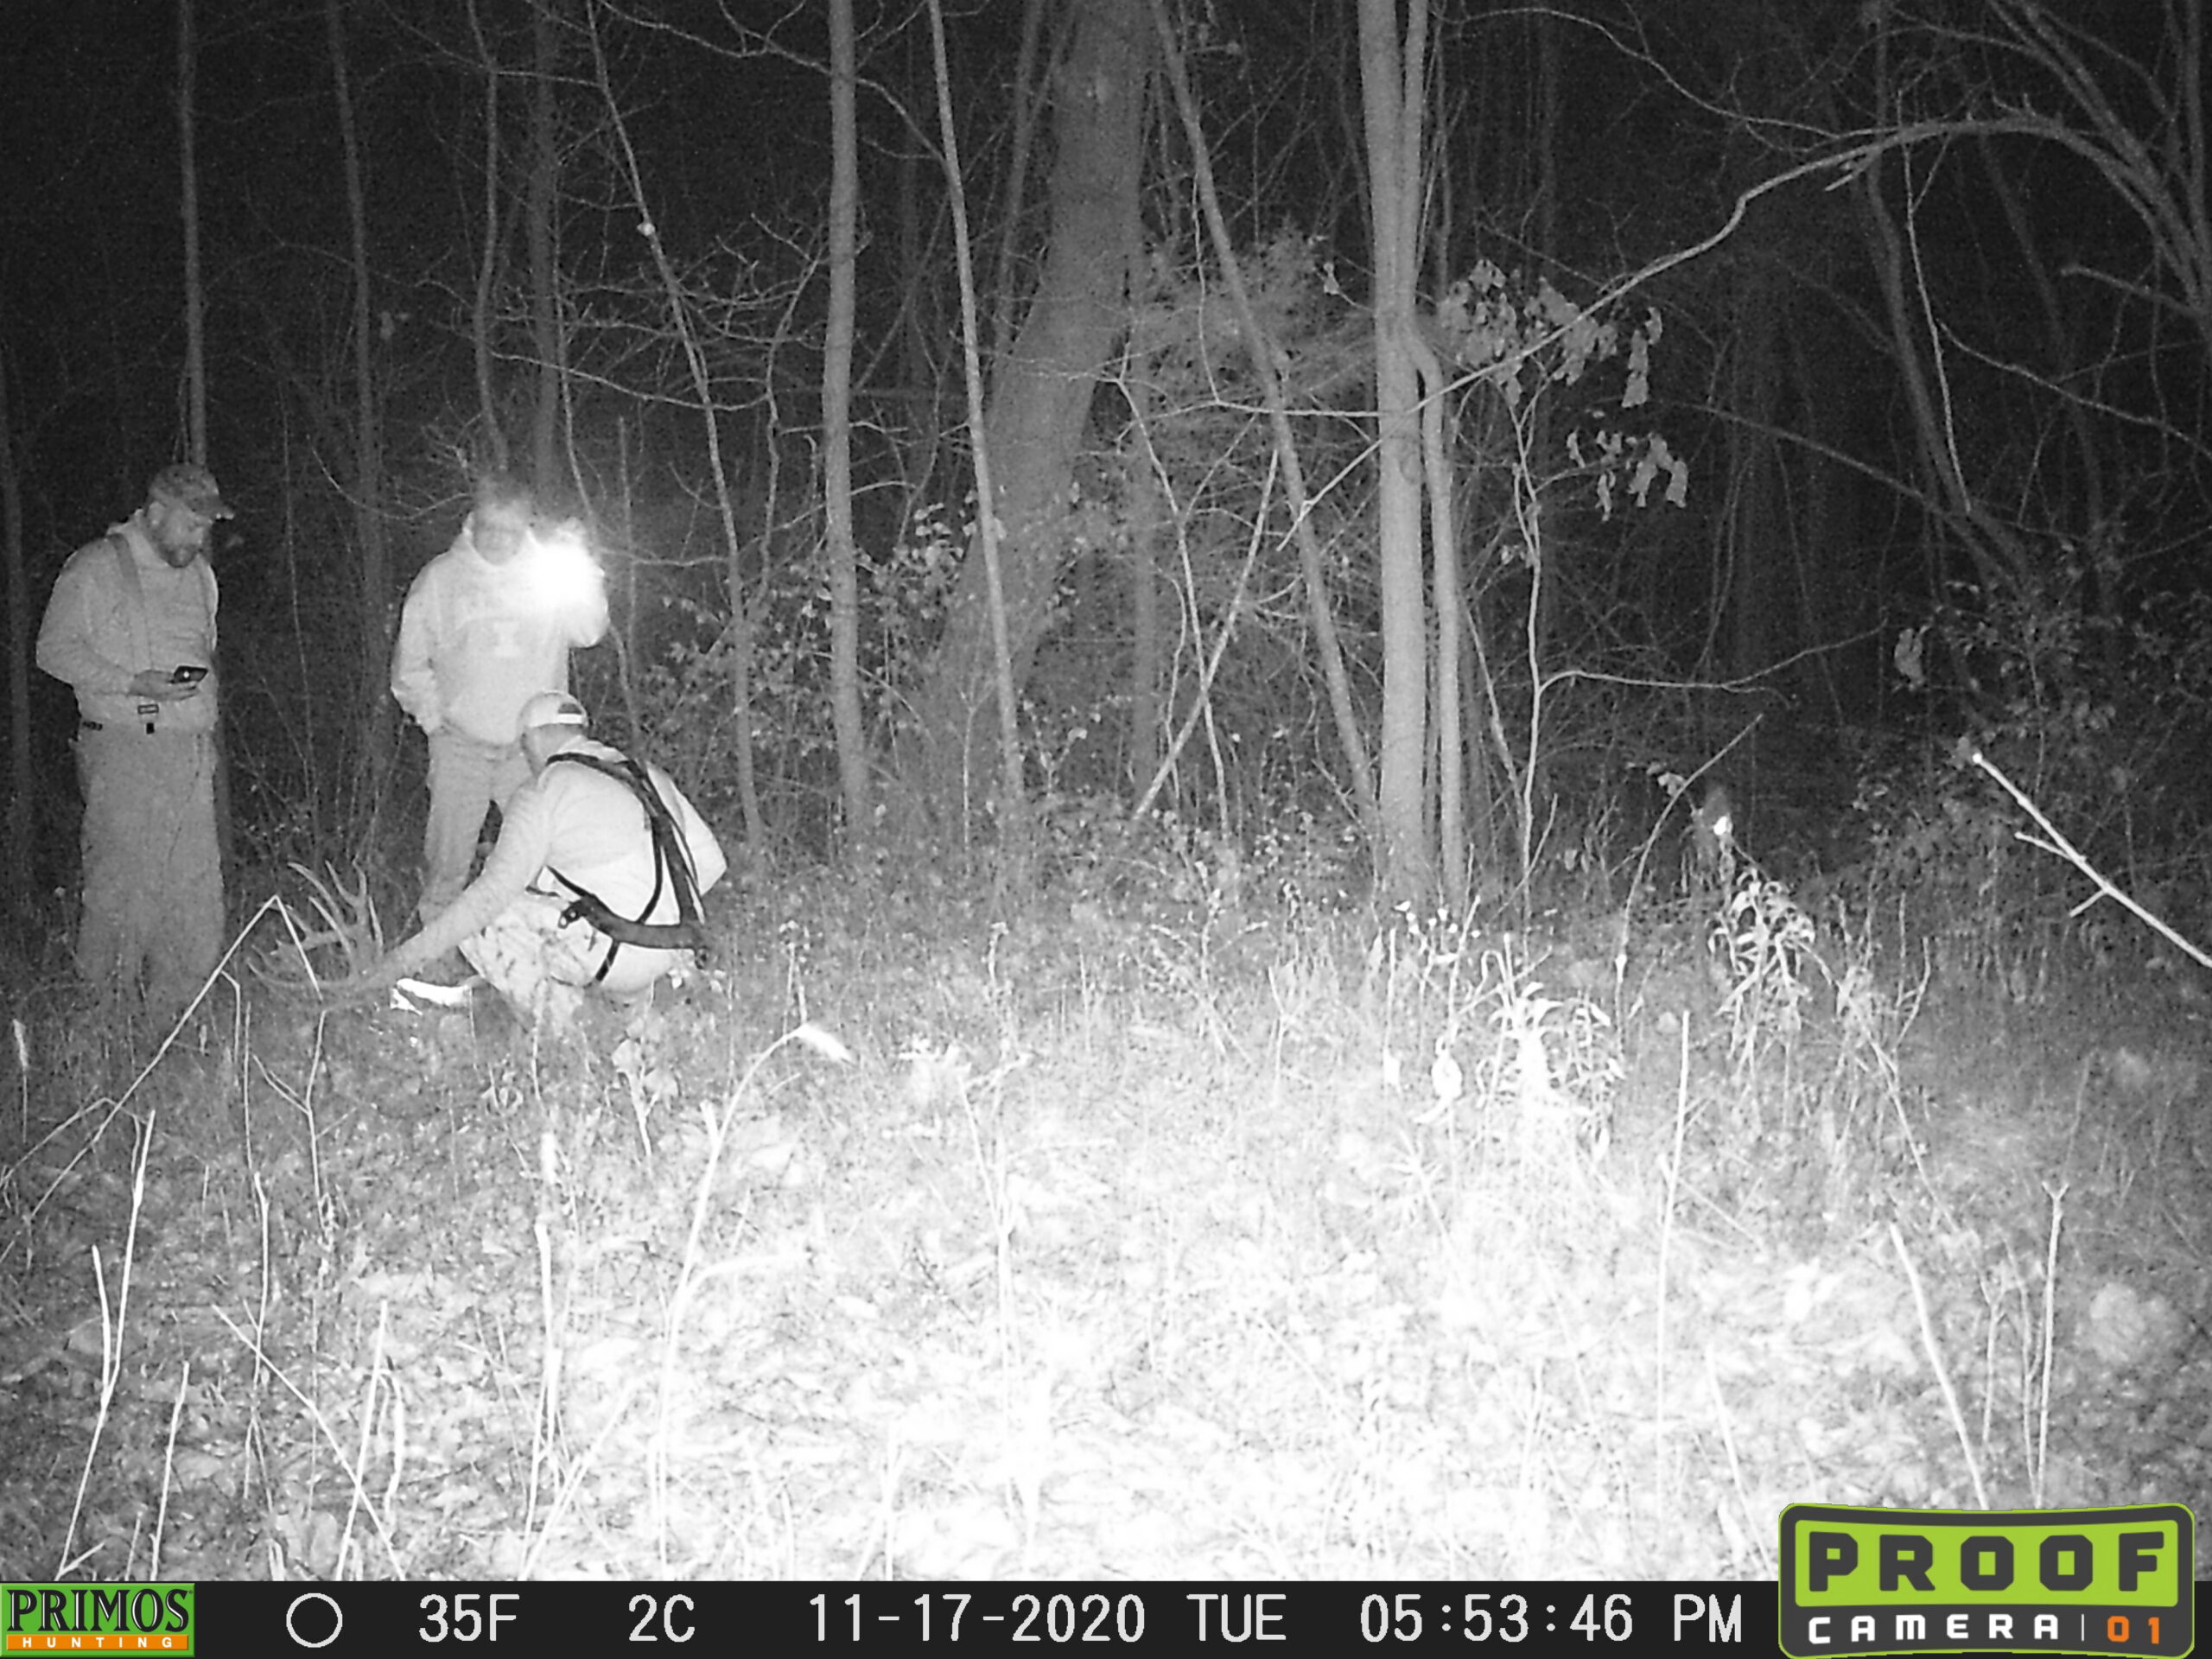 Three guys gathered around a big whitetail buck, on a black and white trail cam photo.